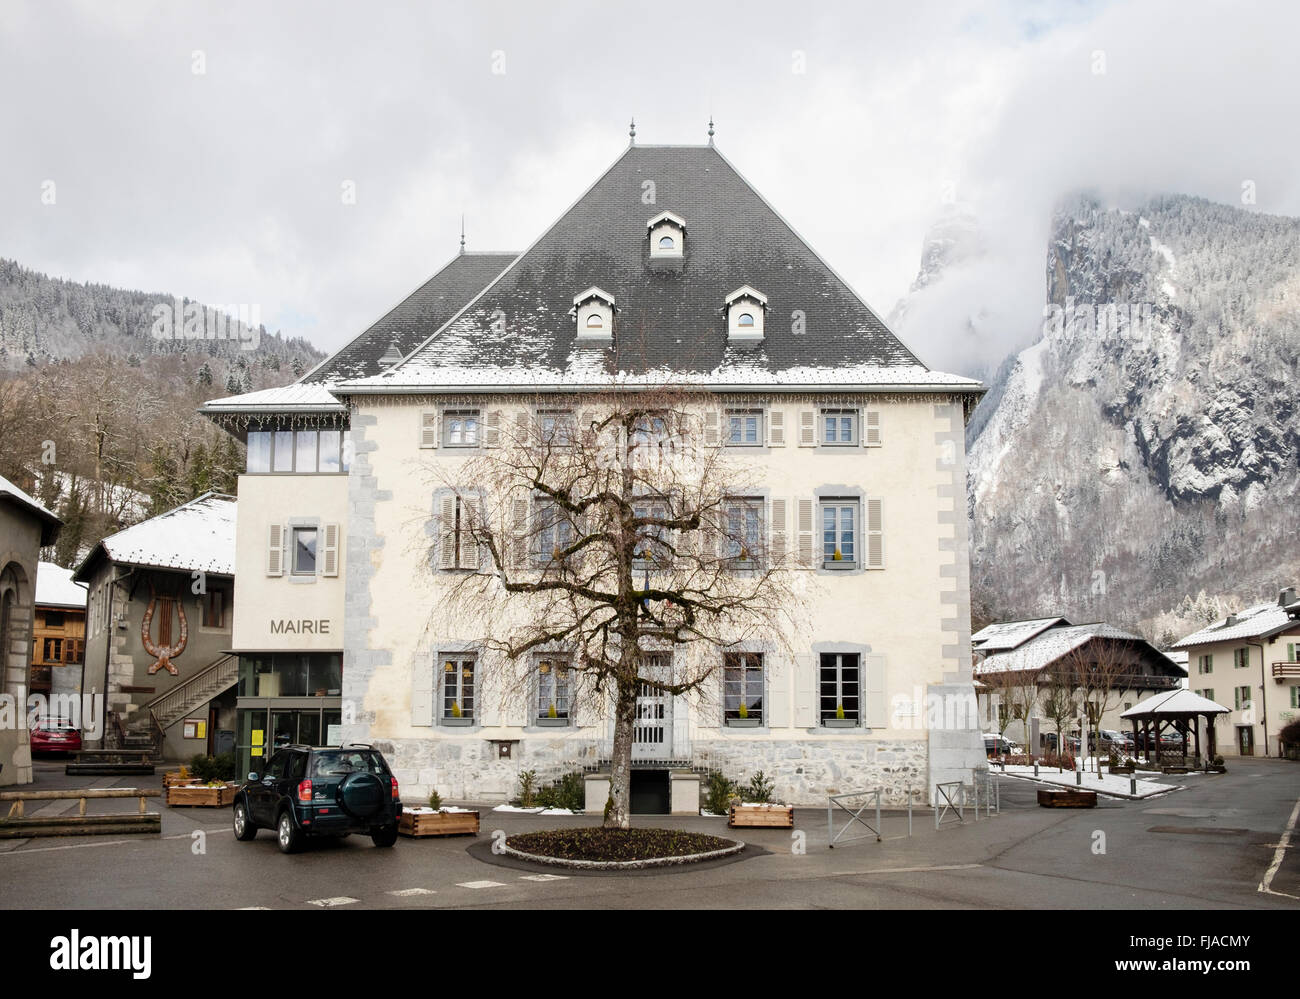 La Mairie edificio tradicional aldea alpina. Place des Dents Blanches, Samoens, Vallée du Giffre, Rhône-Alpes, Francia Foto de stock